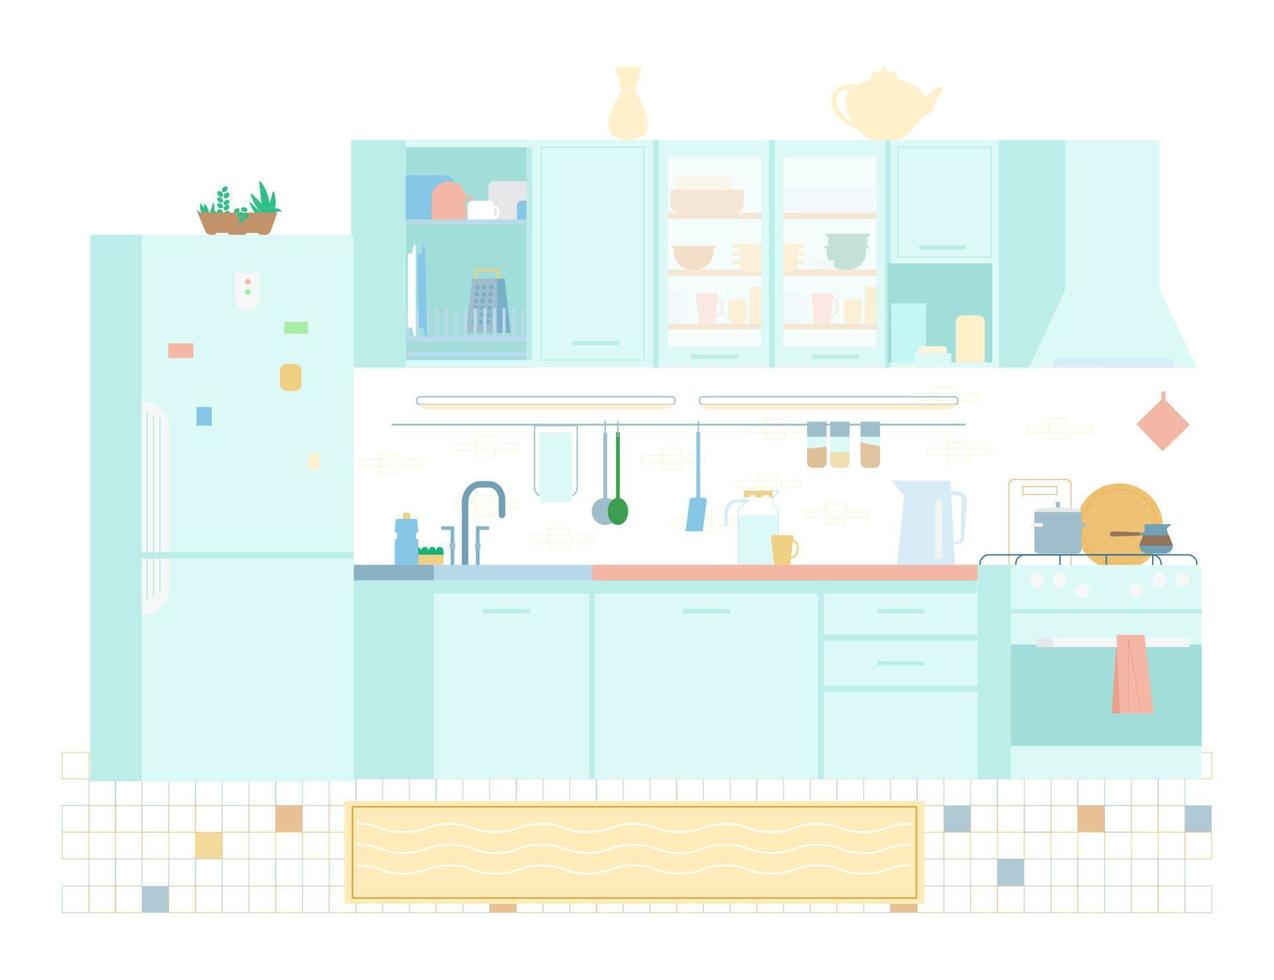 Kitchen Interior In Pastel Colors Flat Vector Illustration. Furniture, Stove, Utensils, Fridge, Shelfs, Sink, Plate Rack.